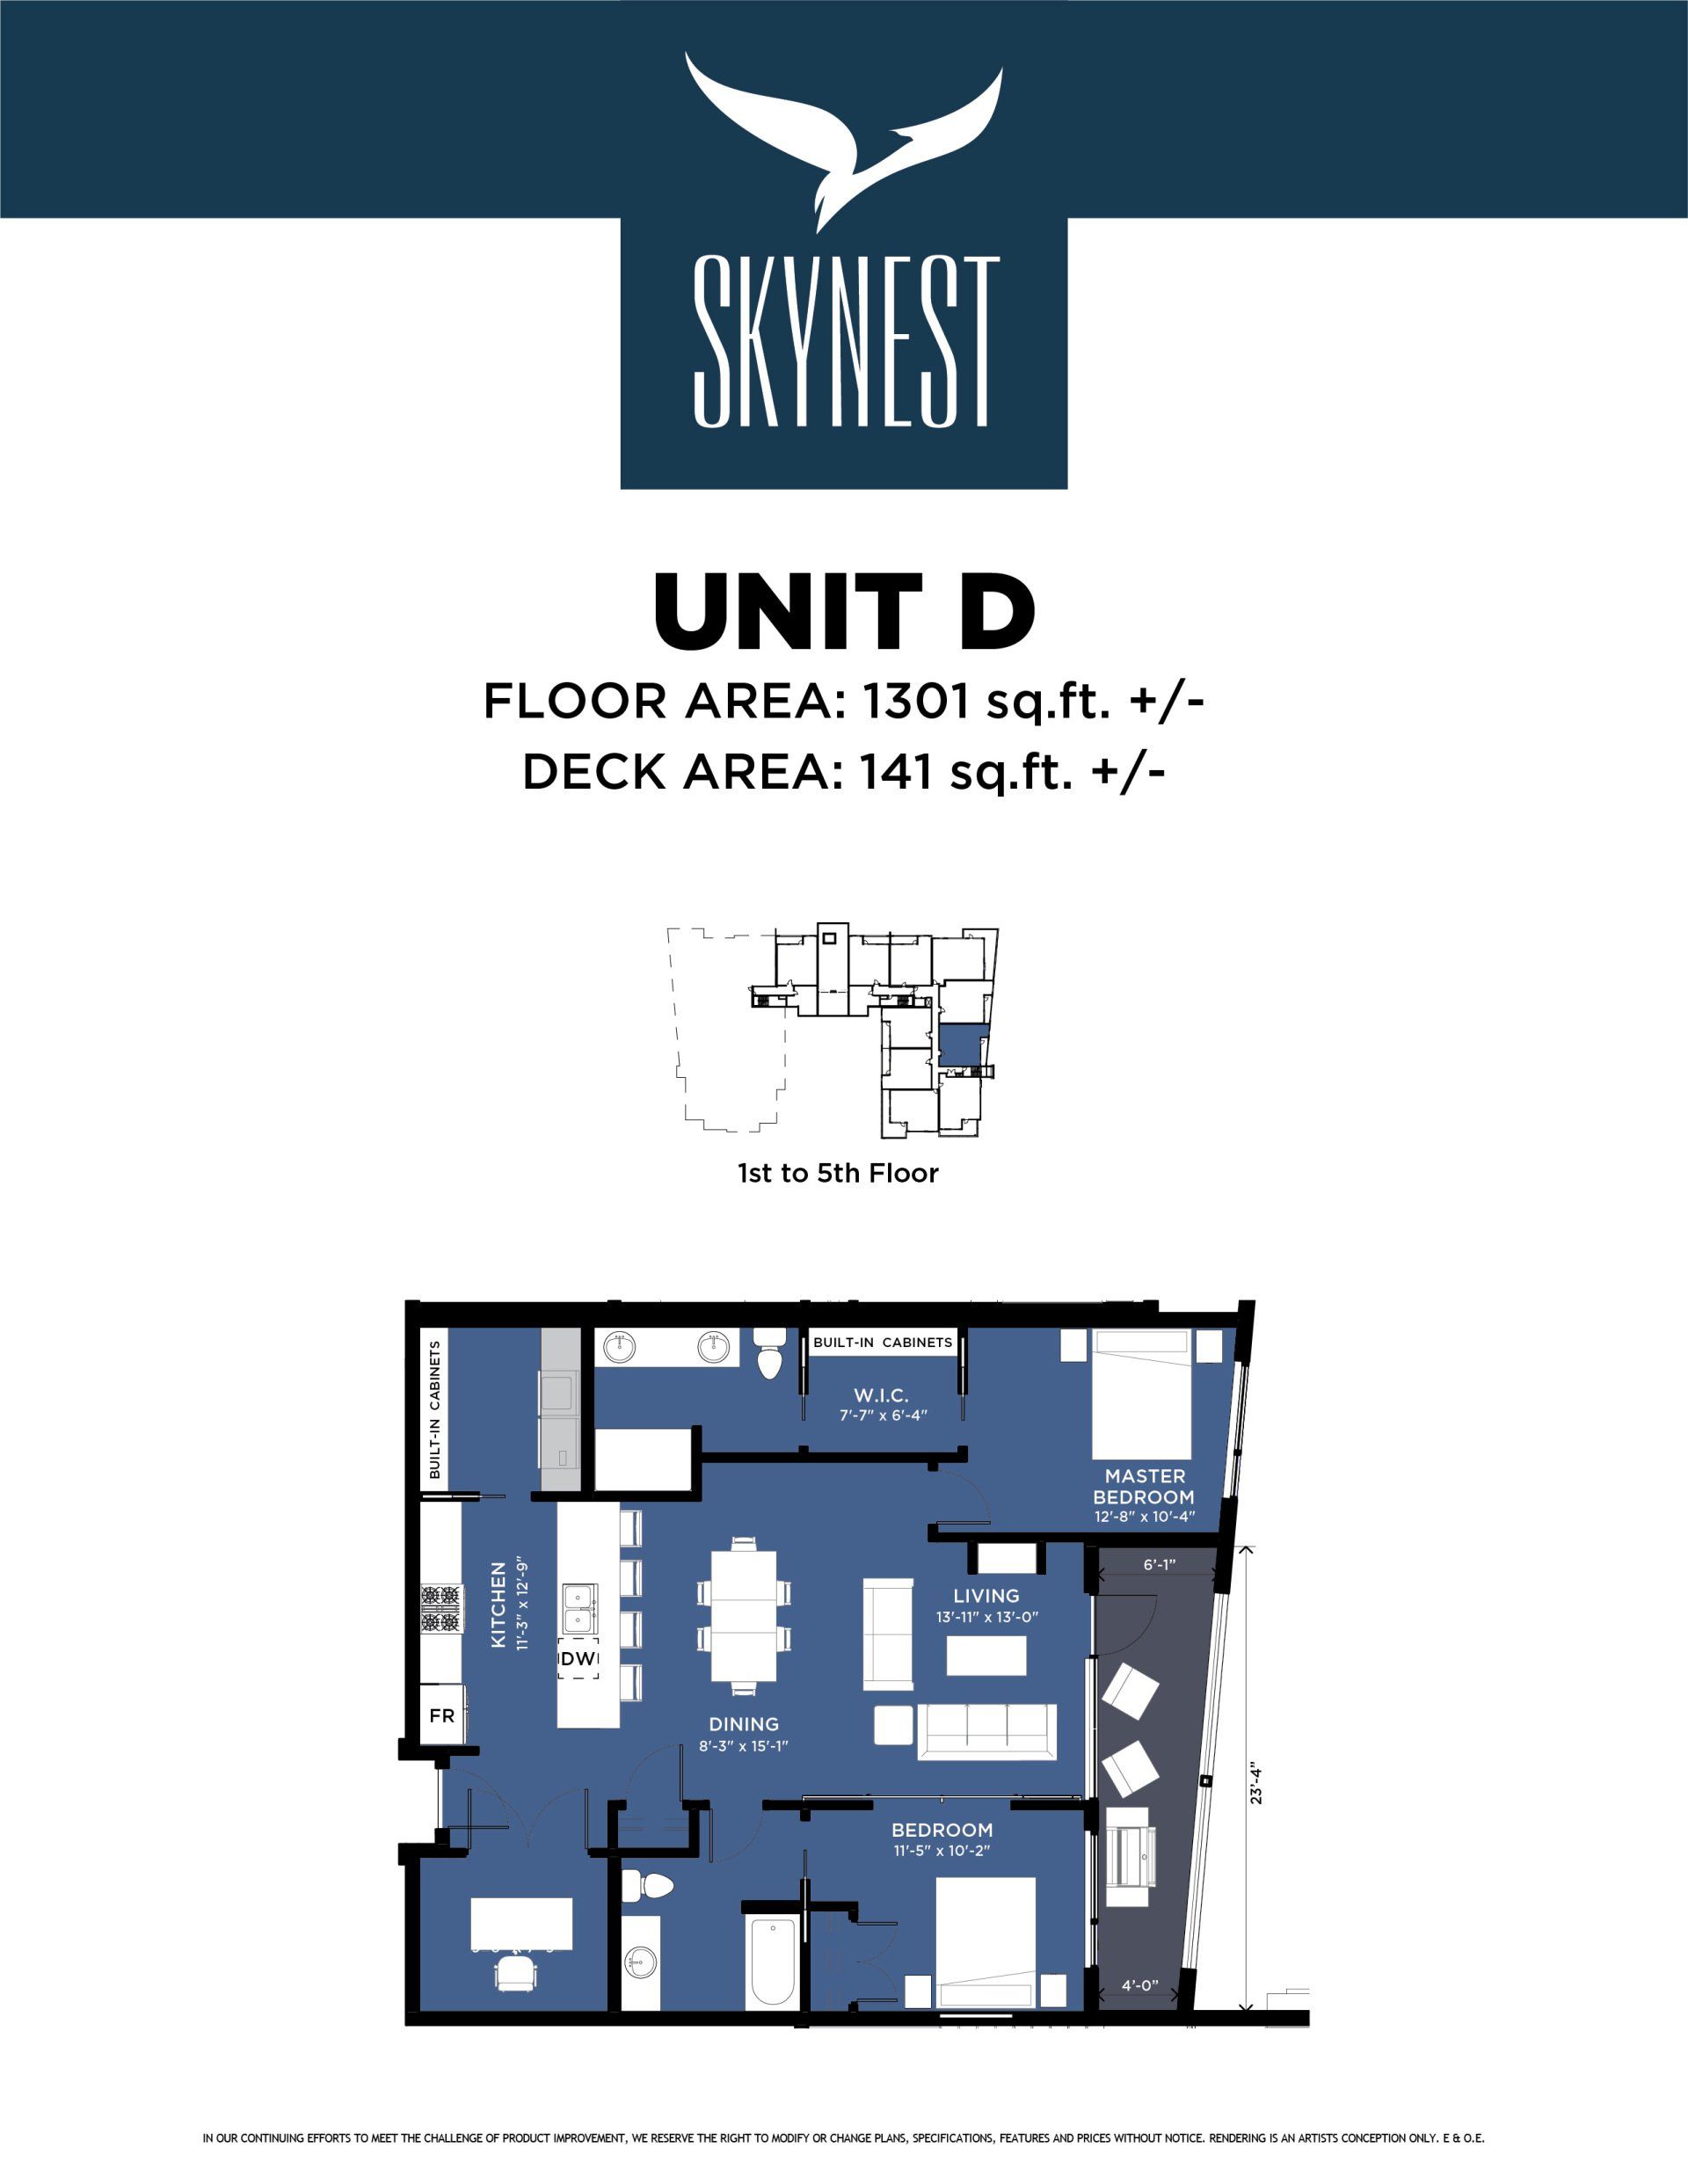 Skynest Unit D Floor Plan